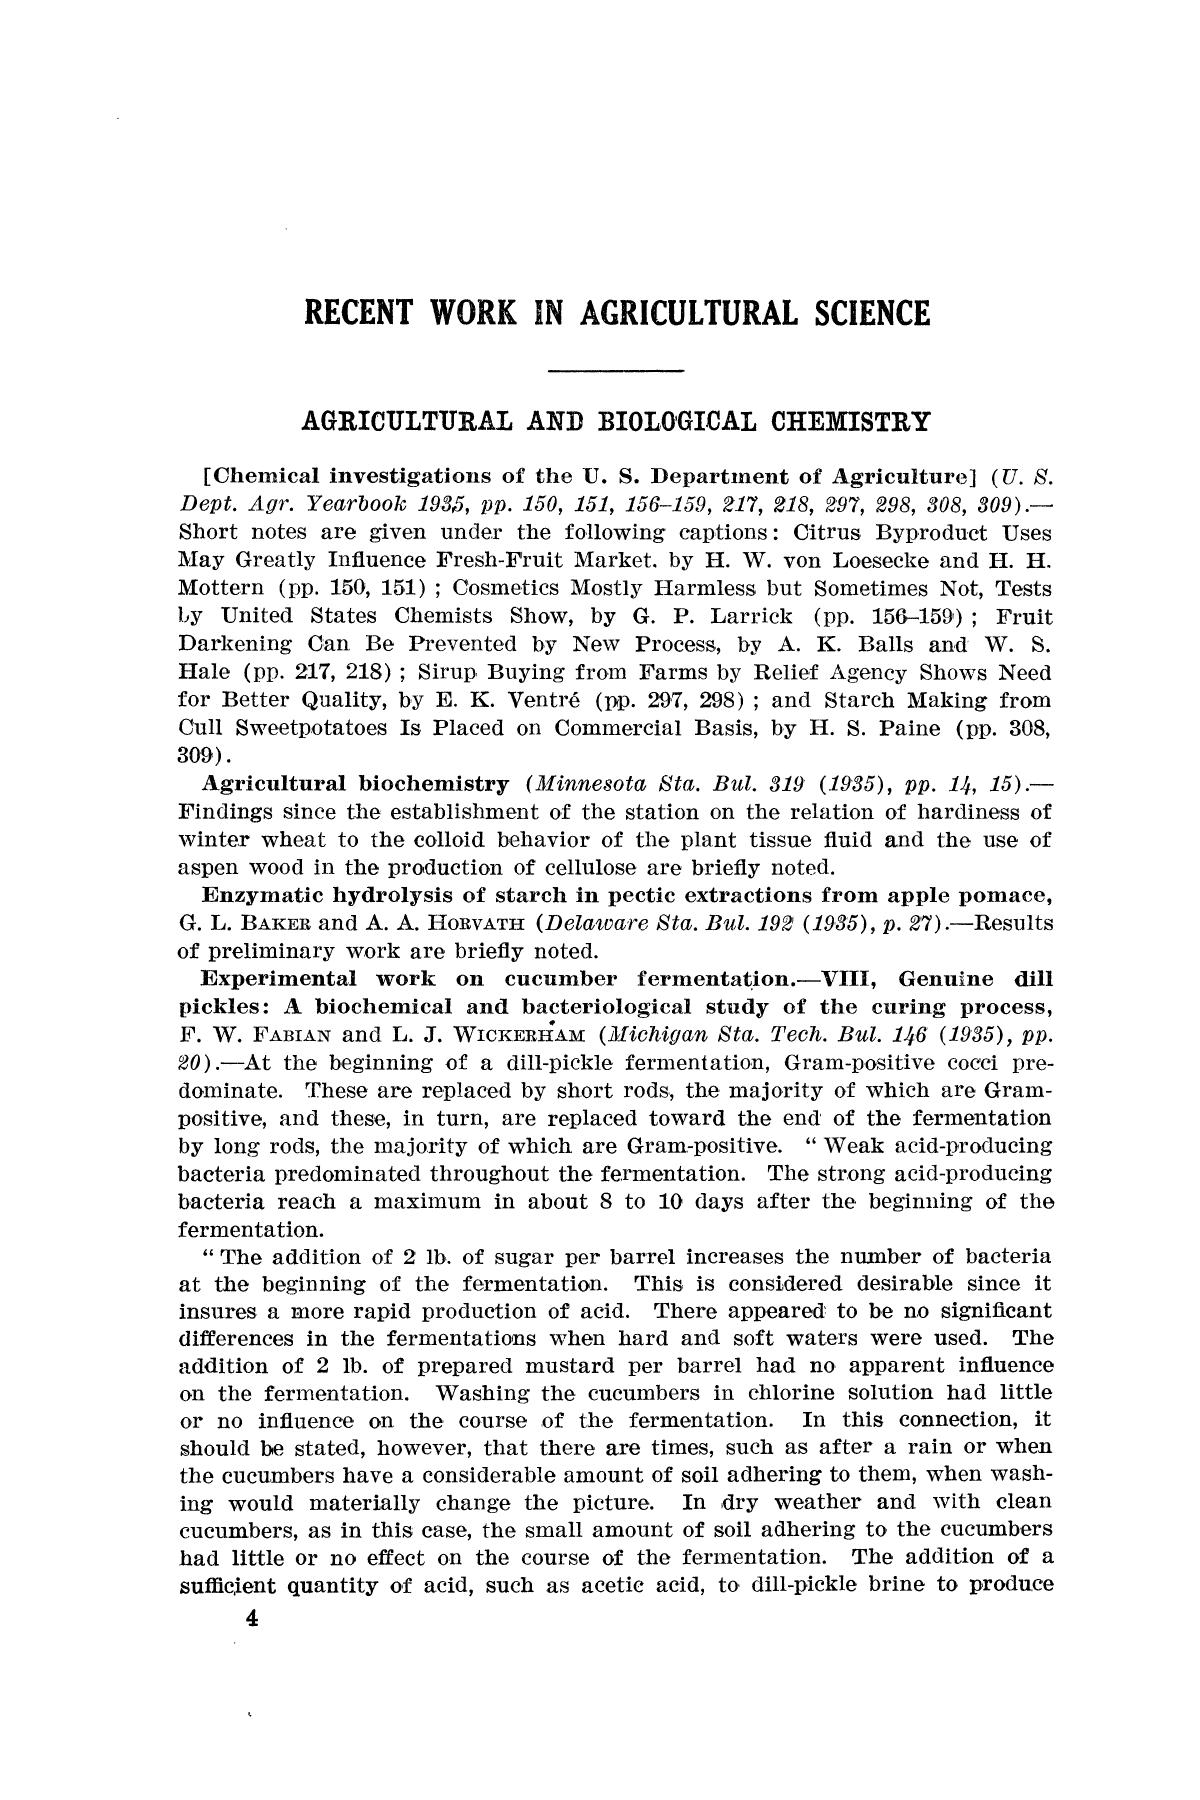 Experiment Station Record, Volume 74, January-June, 1936
                                                
                                                    4
                                                